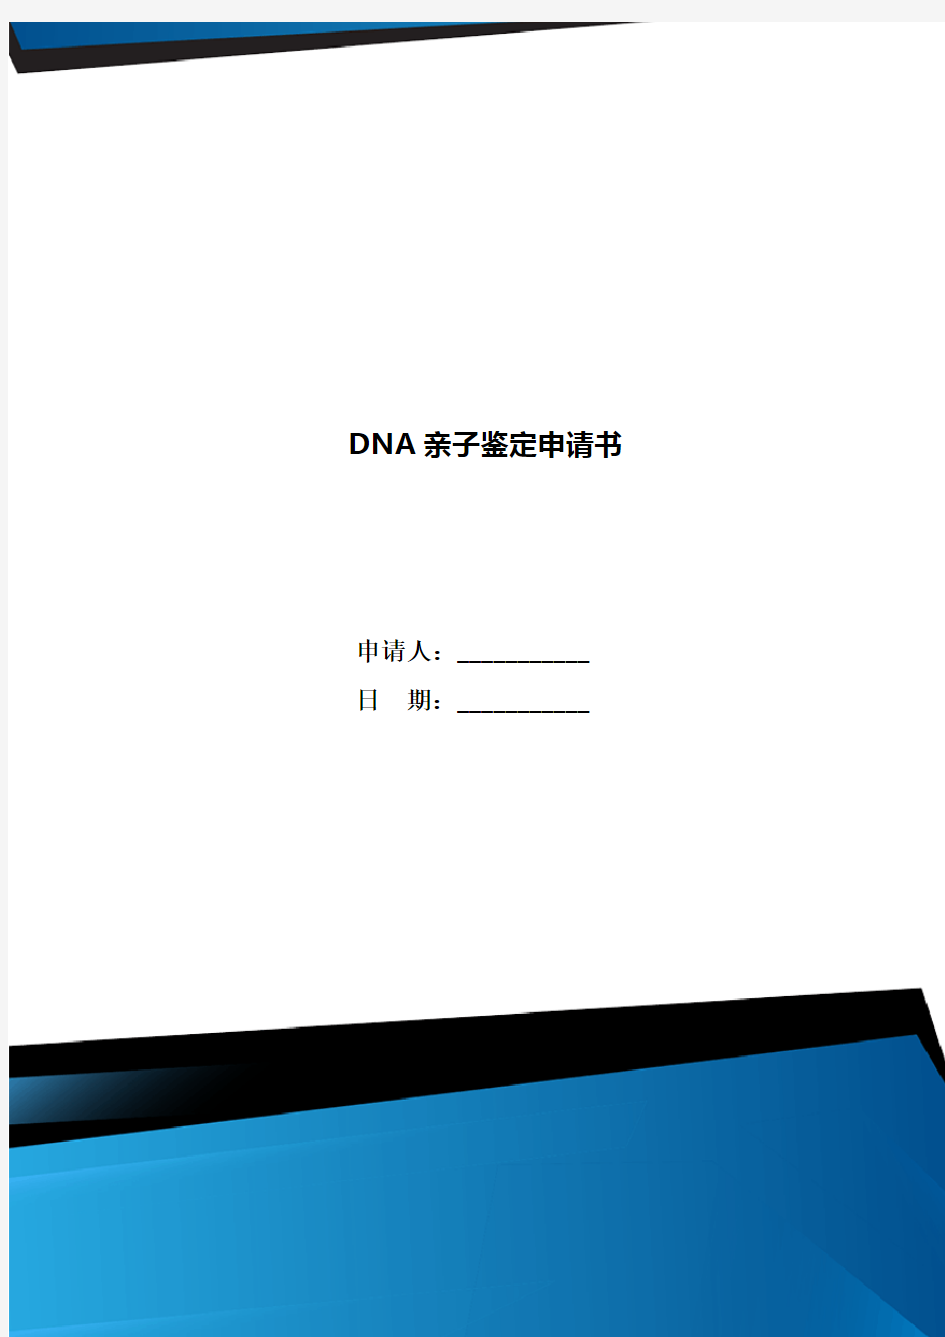 DNA亲子鉴定申请书